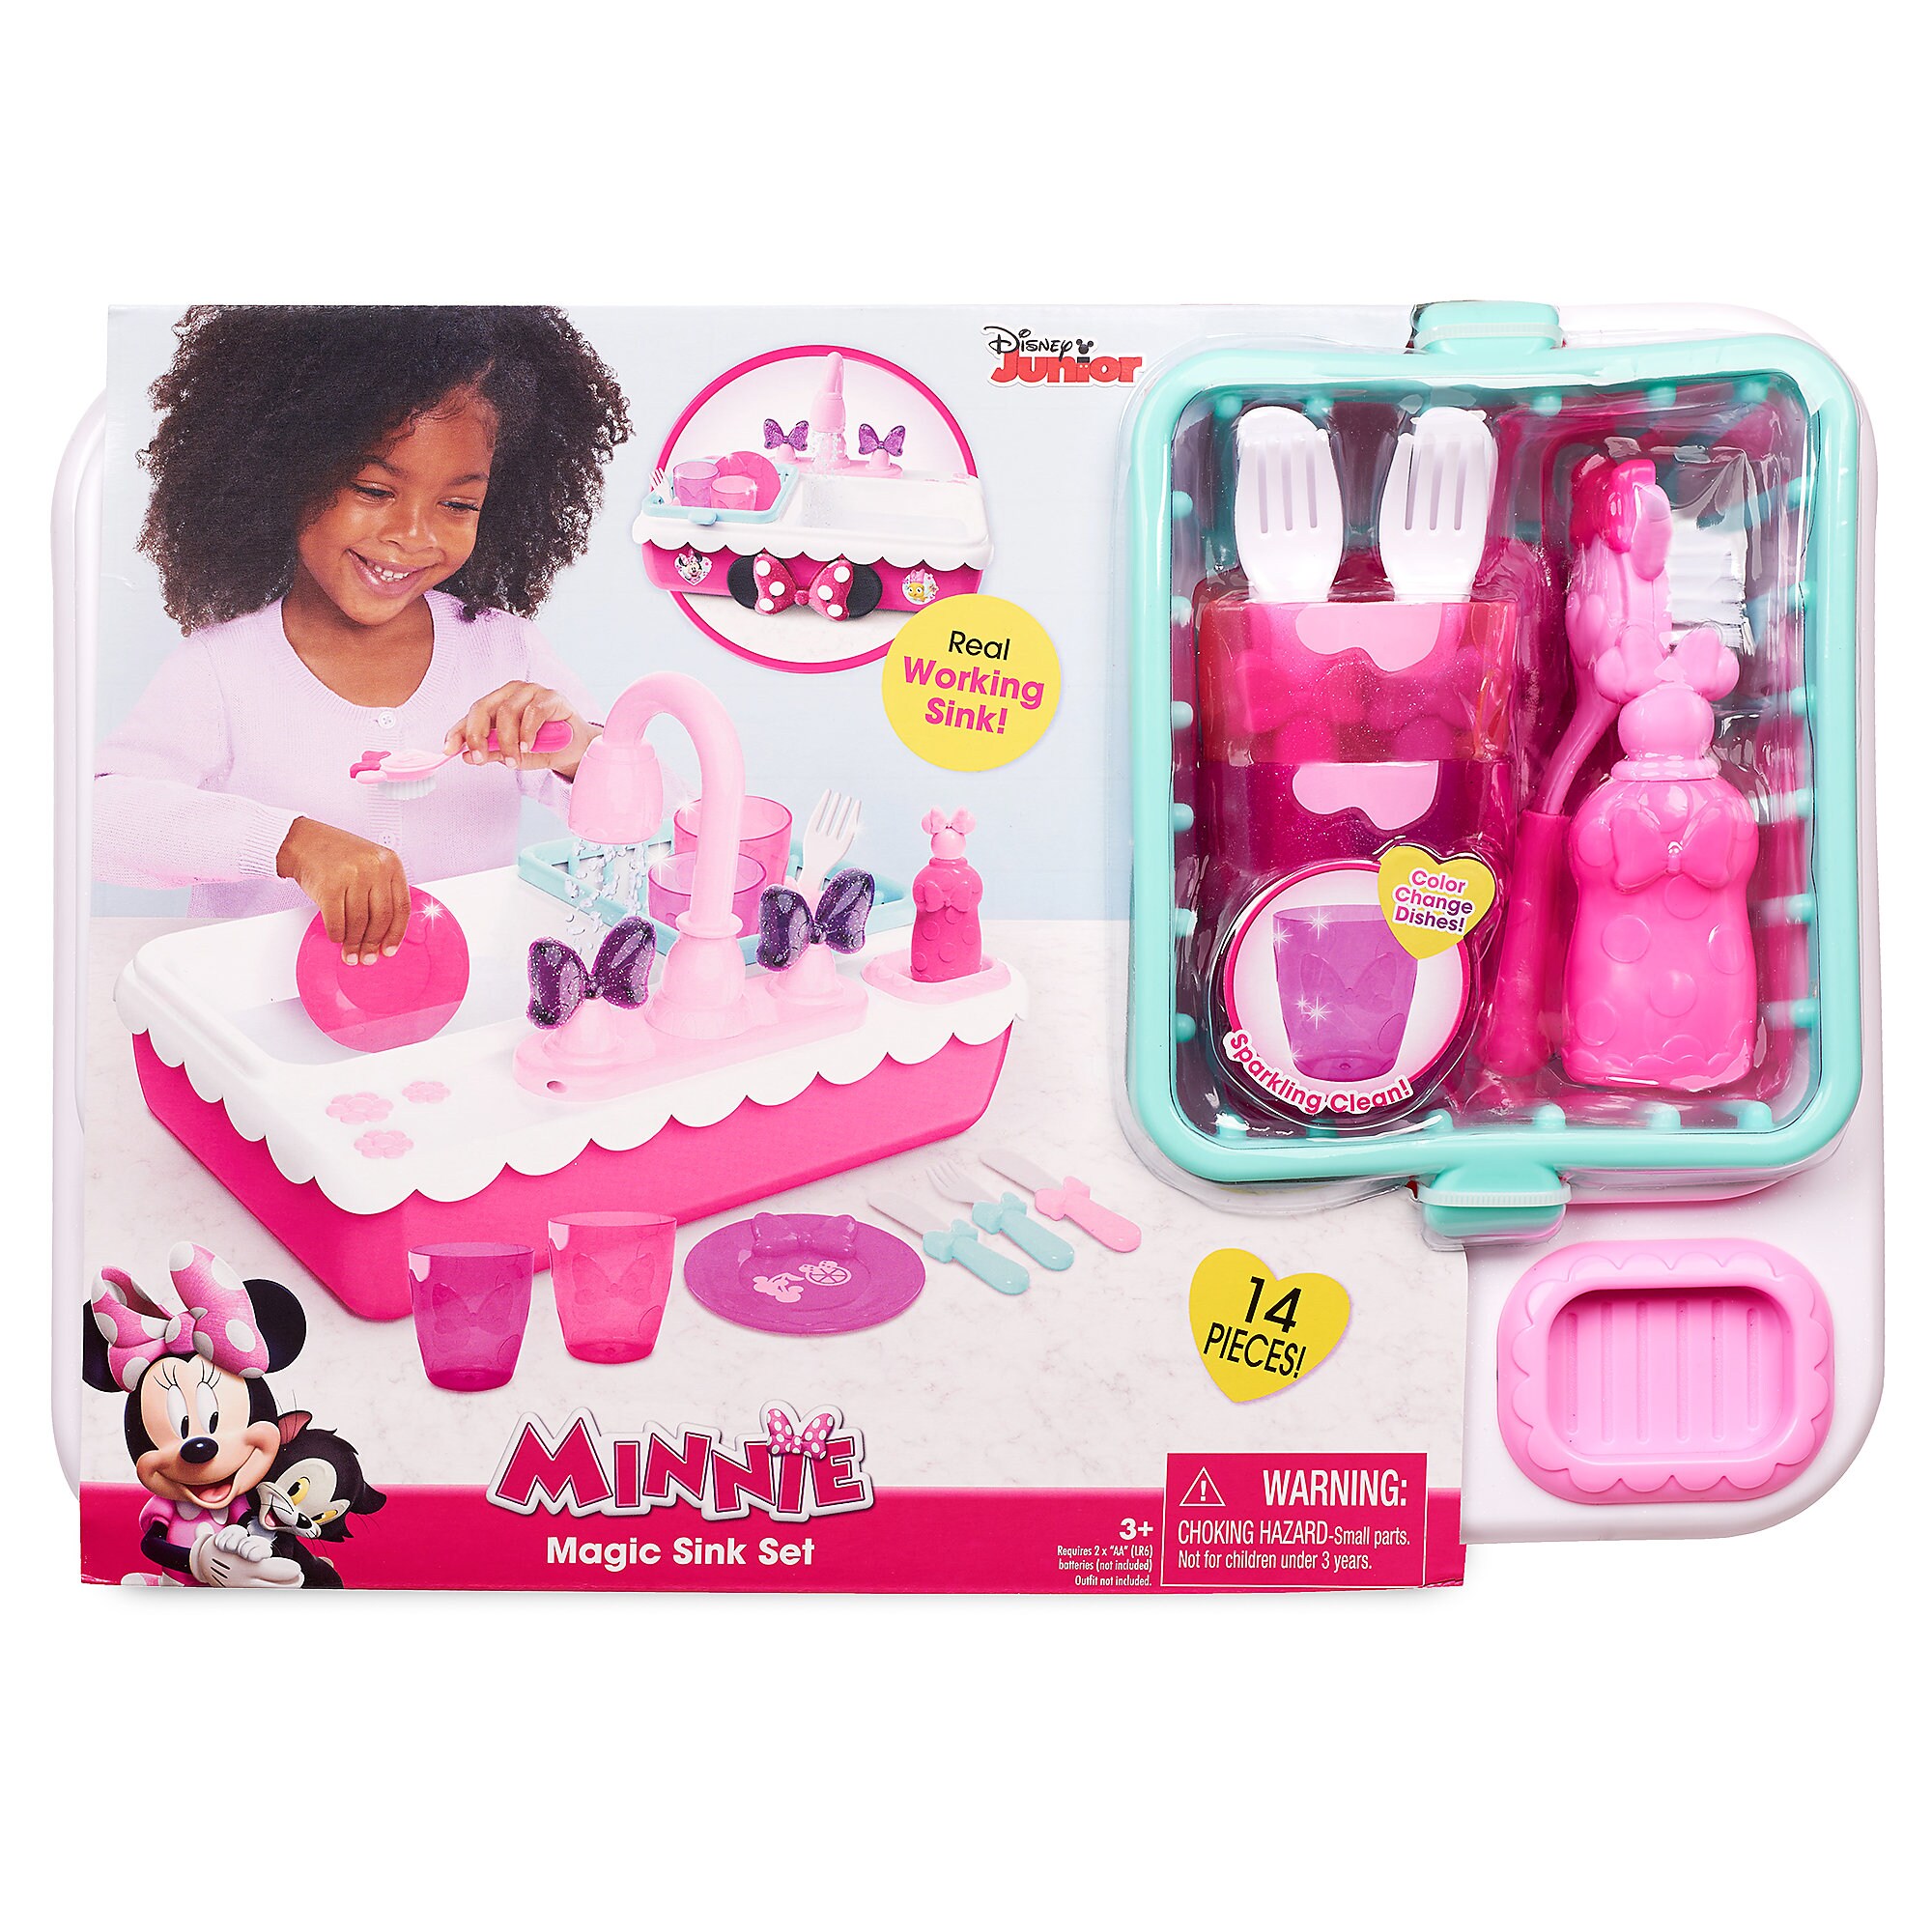 Minnie Mouse Magic Sink Set